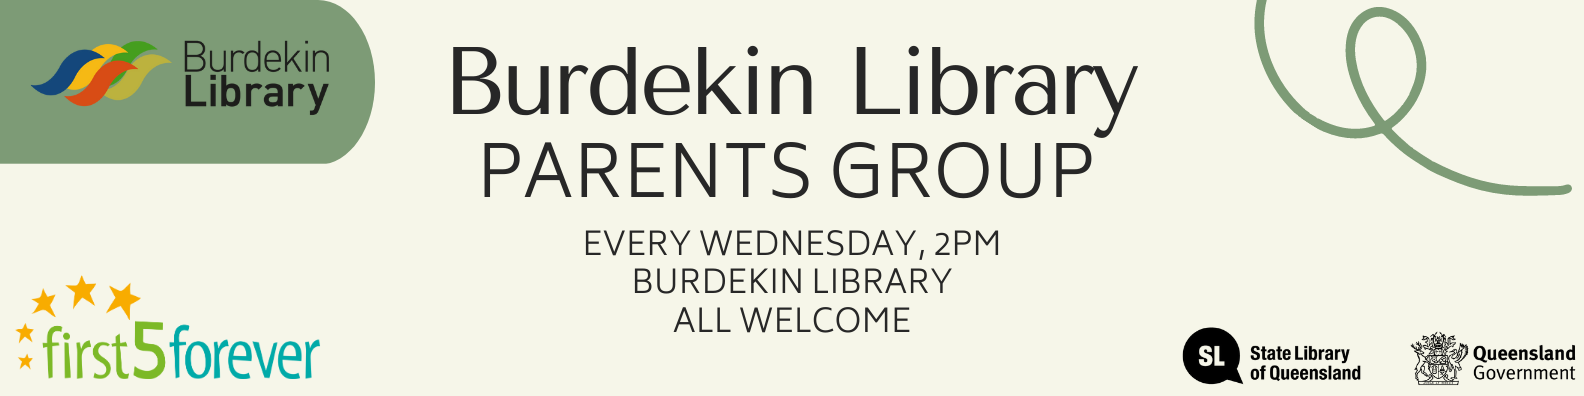 Burdekin Library Parents Group Banner